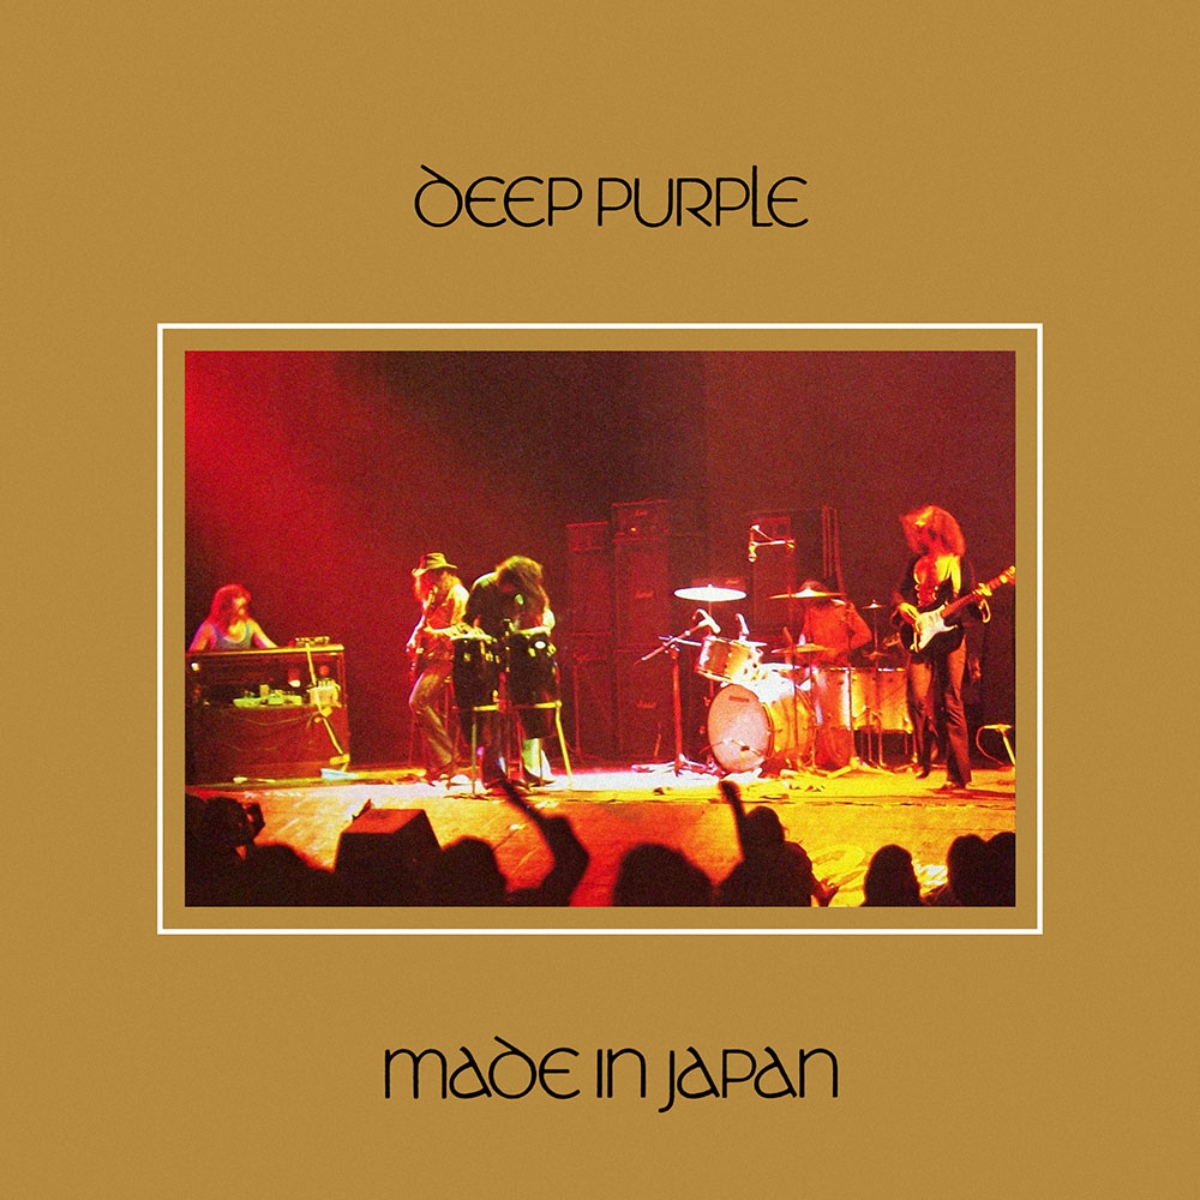 Deep Purple - "Made in Japan" (pochette d'album)